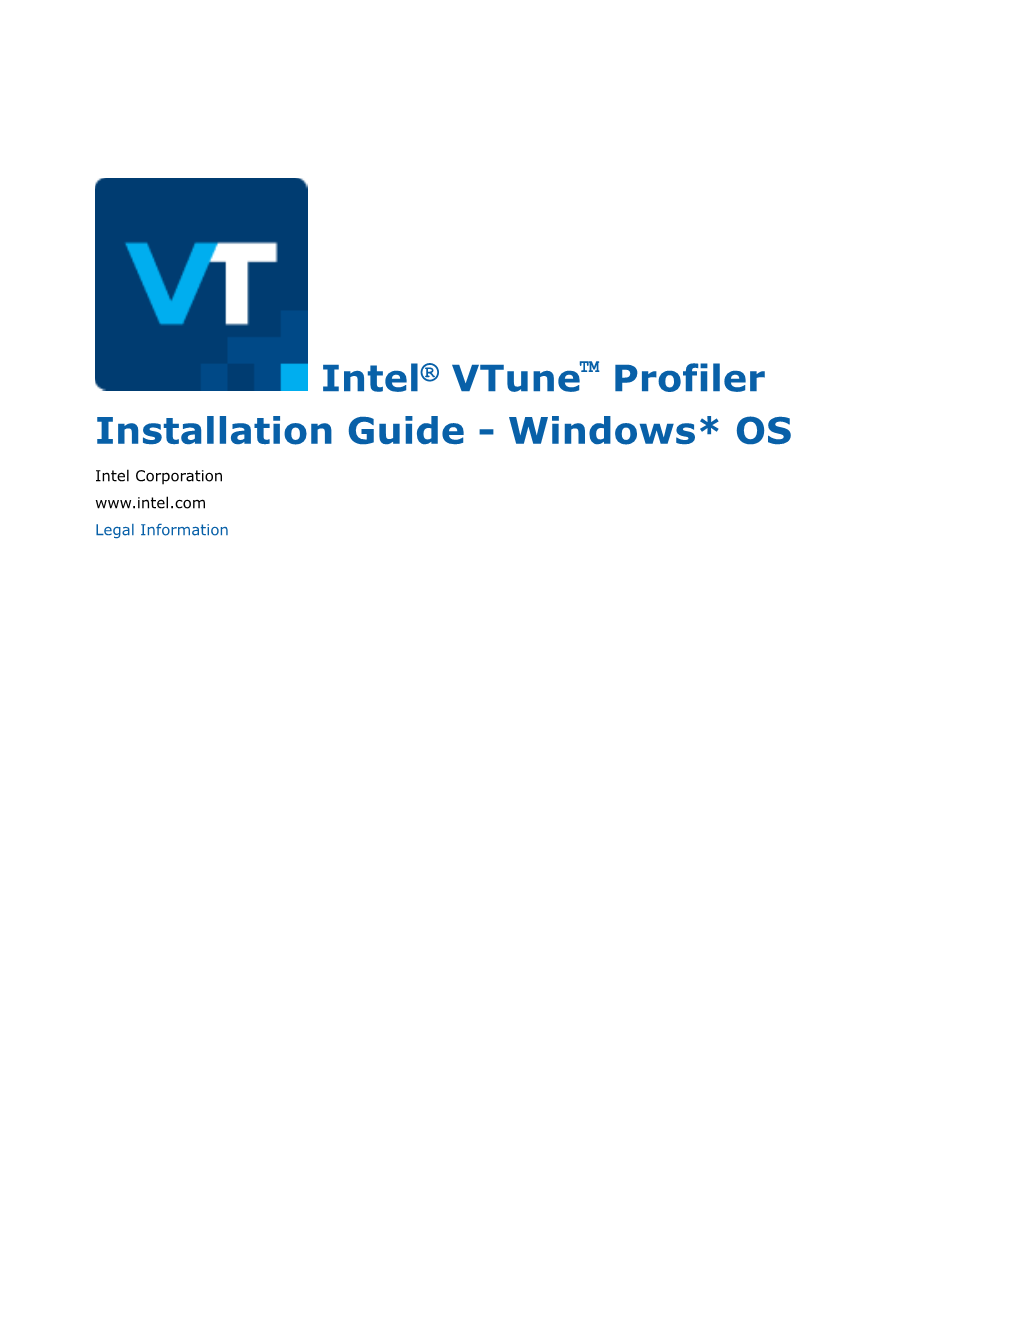 Intel® Vtune™ Profiler Installation Guide - Windows* OS